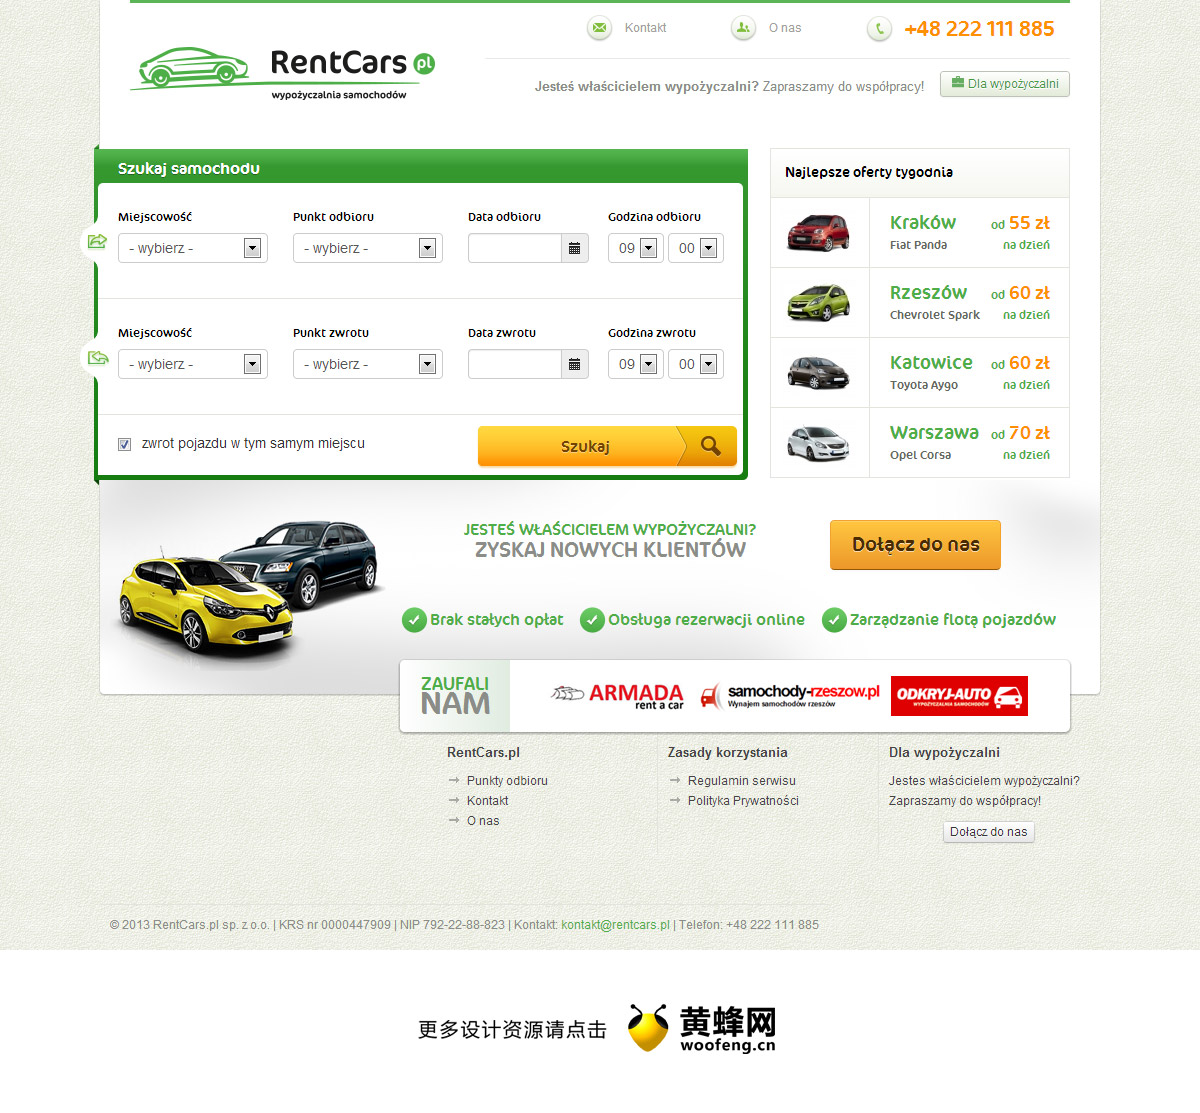 RentCars租车服务，来源自黄蜂网https://woofeng.cn/web/